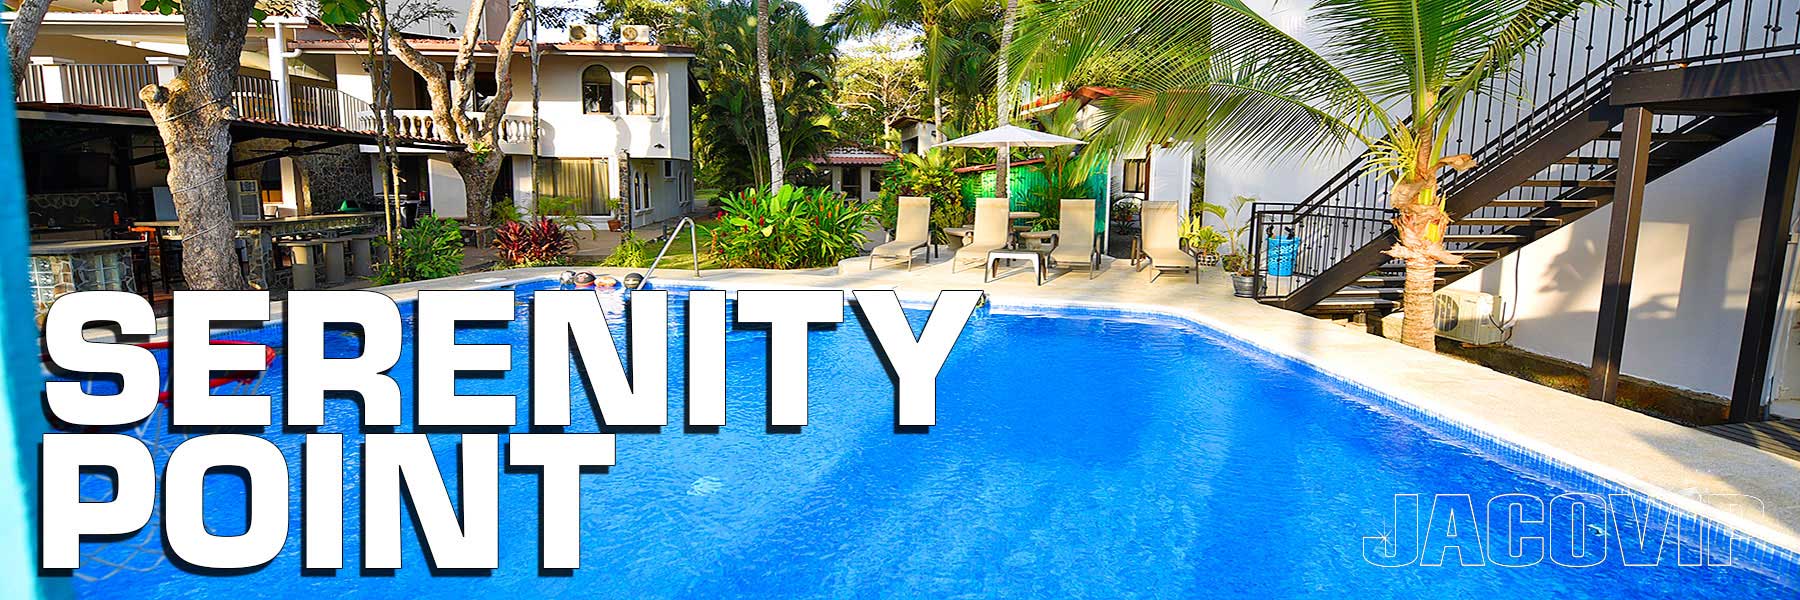 Serenity Point Jaco beach front 15 bedroom Vacation Rental villas